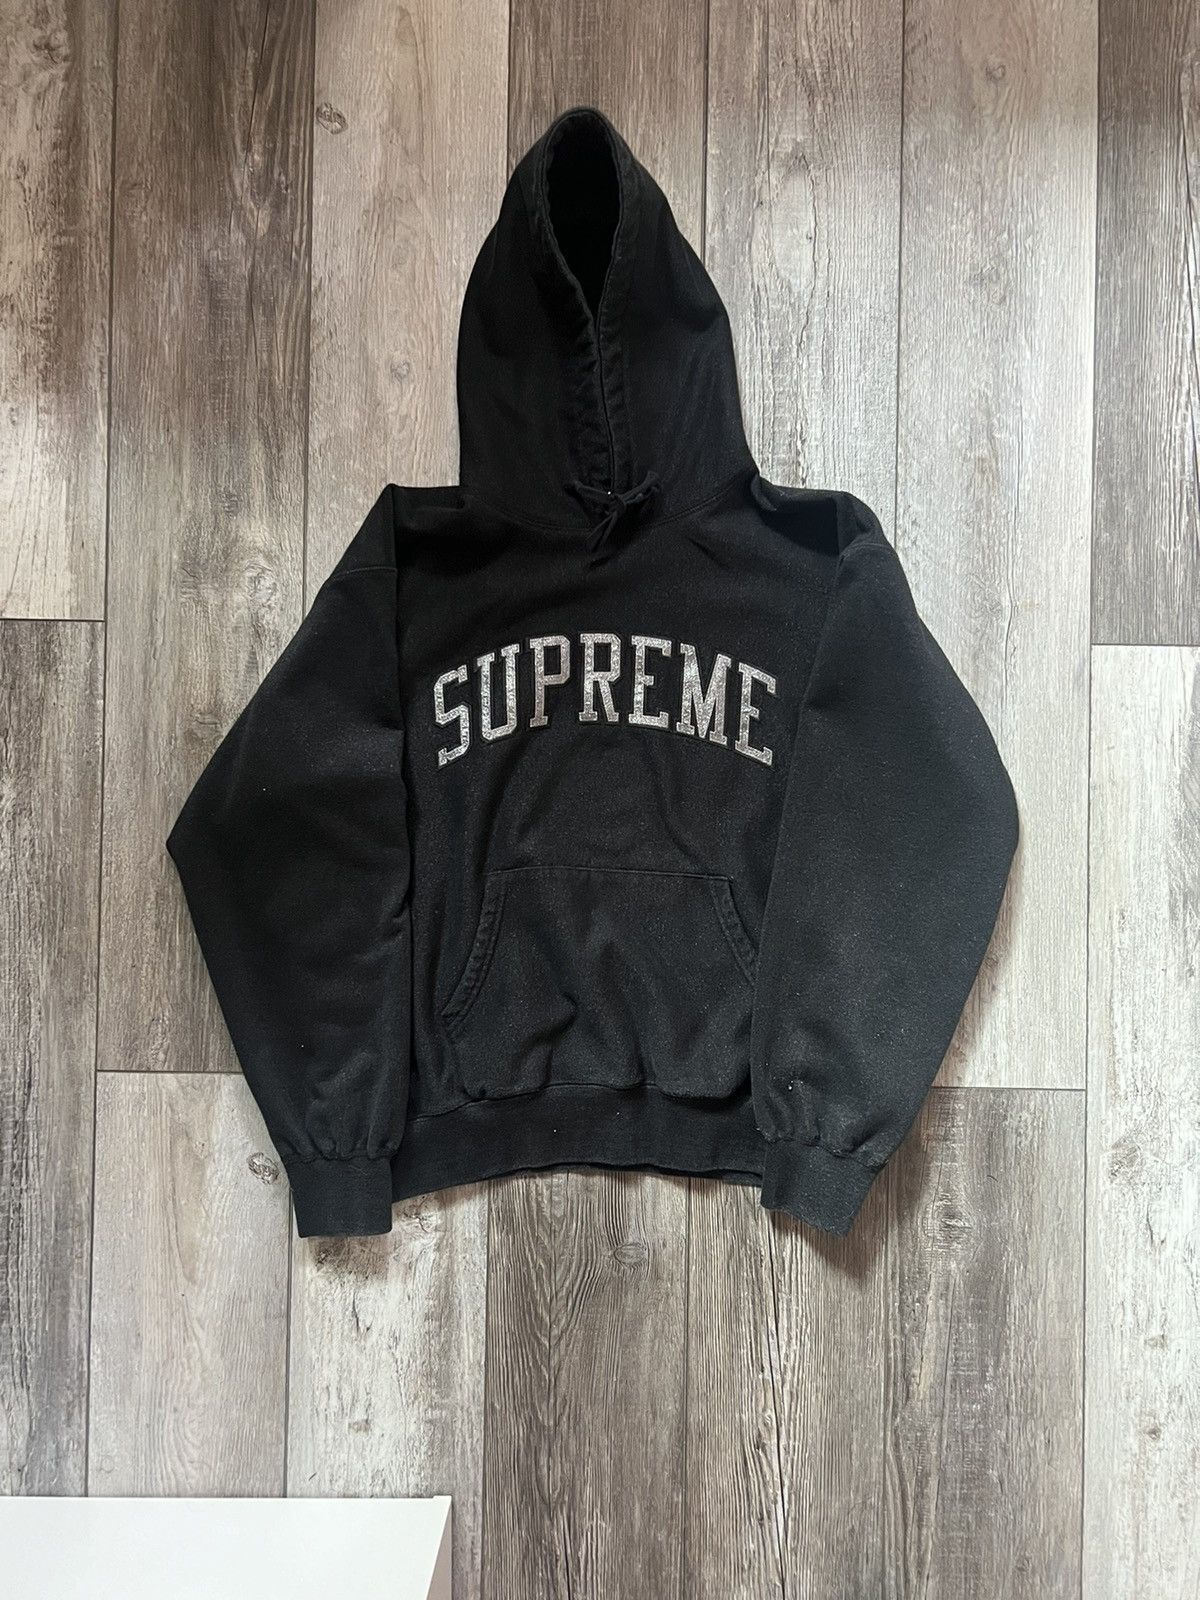 Supreme Supreme Glitter Arc Hooded Sweatshirt | Grailed